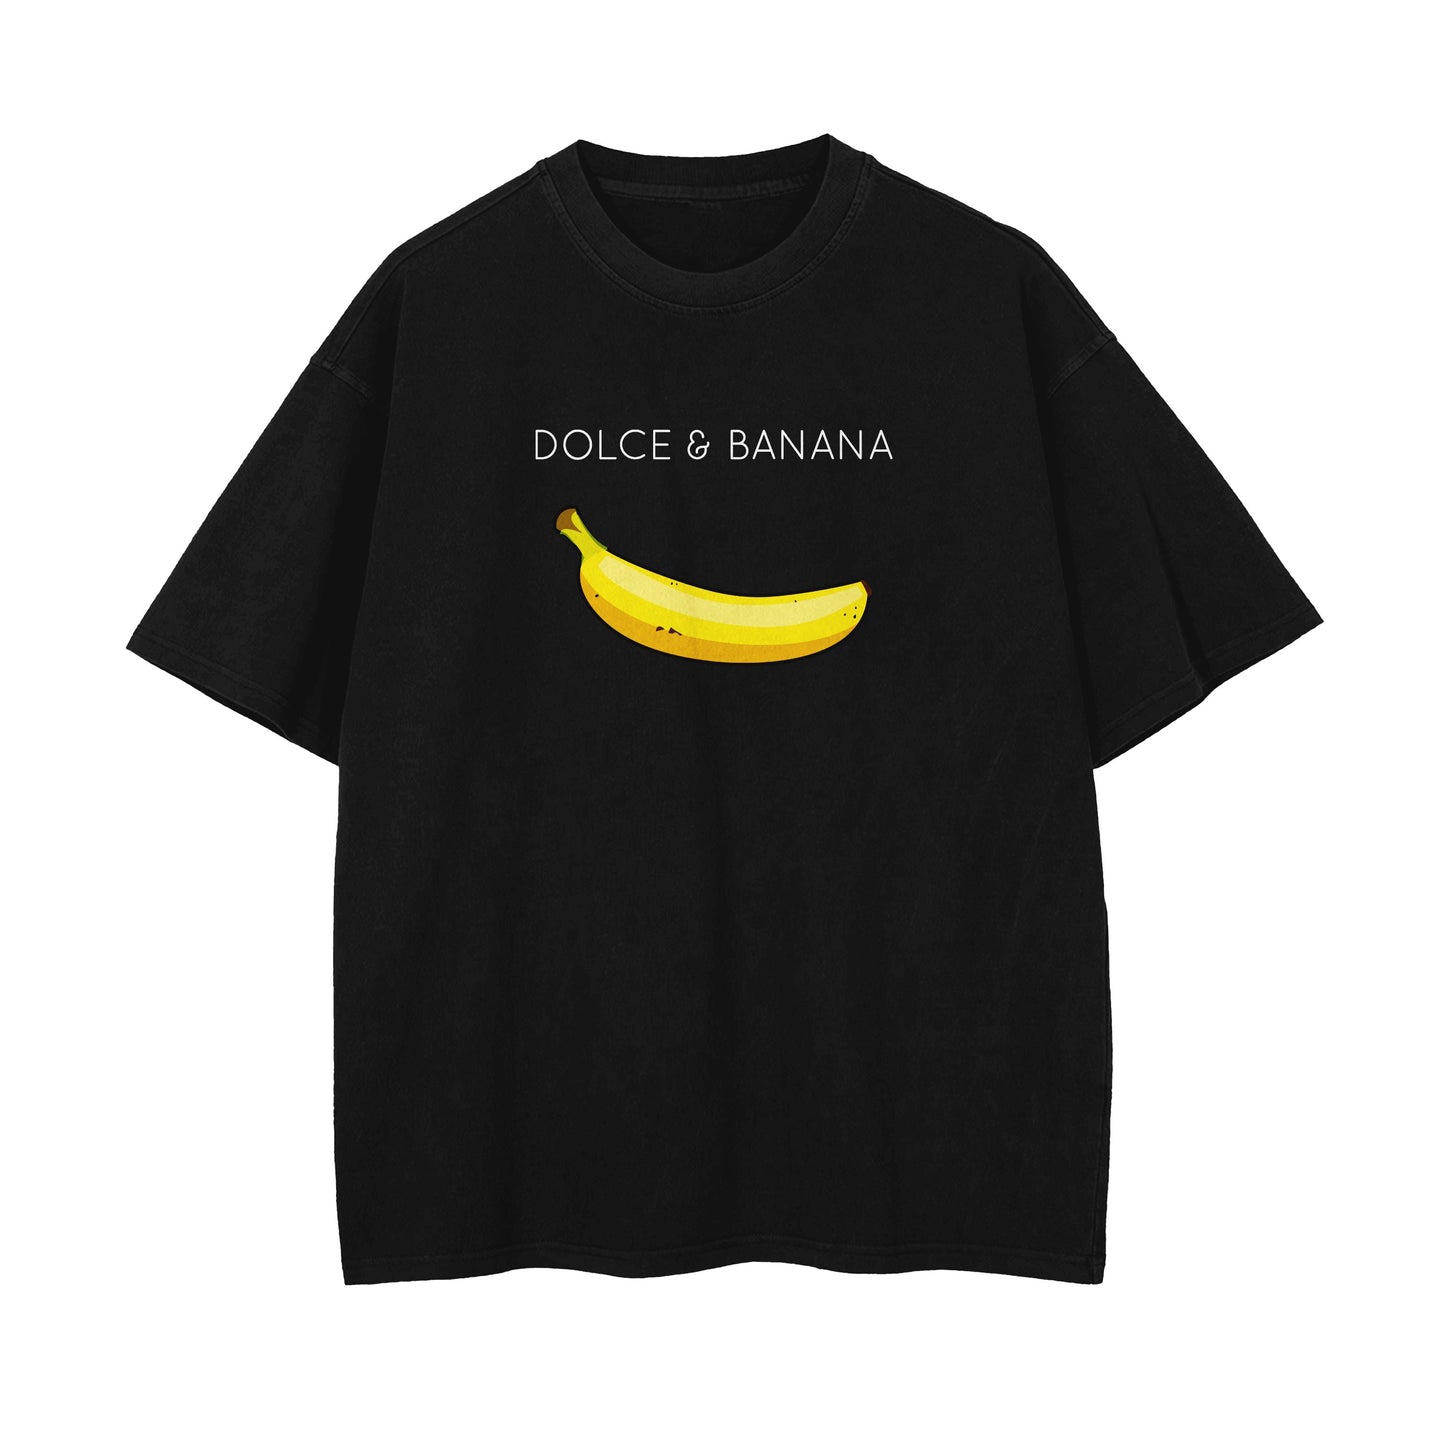 Dolce & Banana Oversized T-shirt - Black